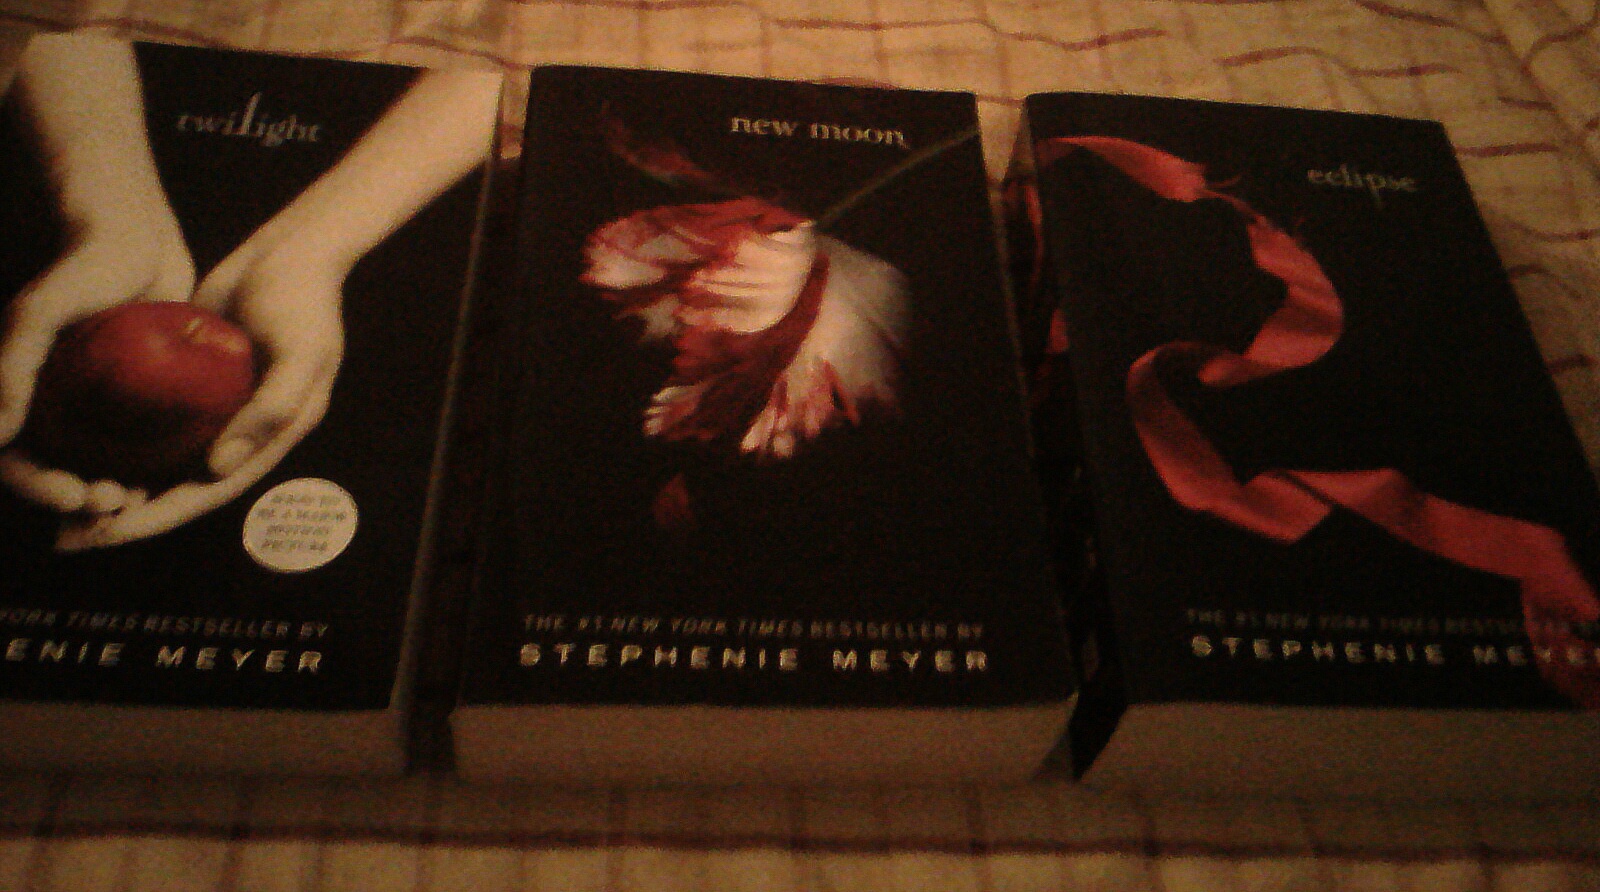 Twilight series: books one through three